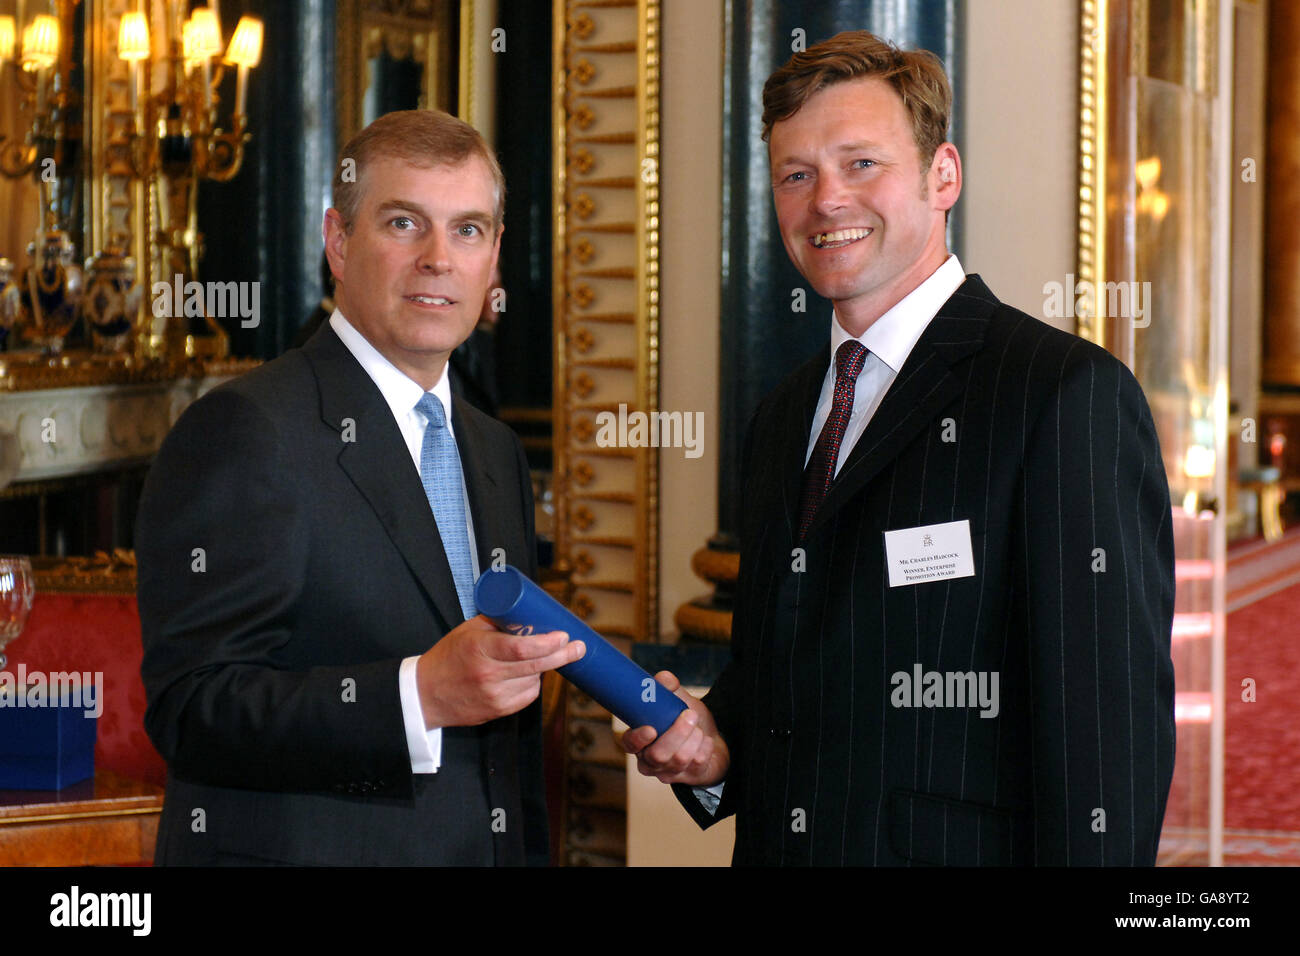 The Duke of York presents Mr Charles Hadcock the Lifetime Achievement Award for Enterprise Promotion 2007 at Buckingham Palace, London. Stock Photo